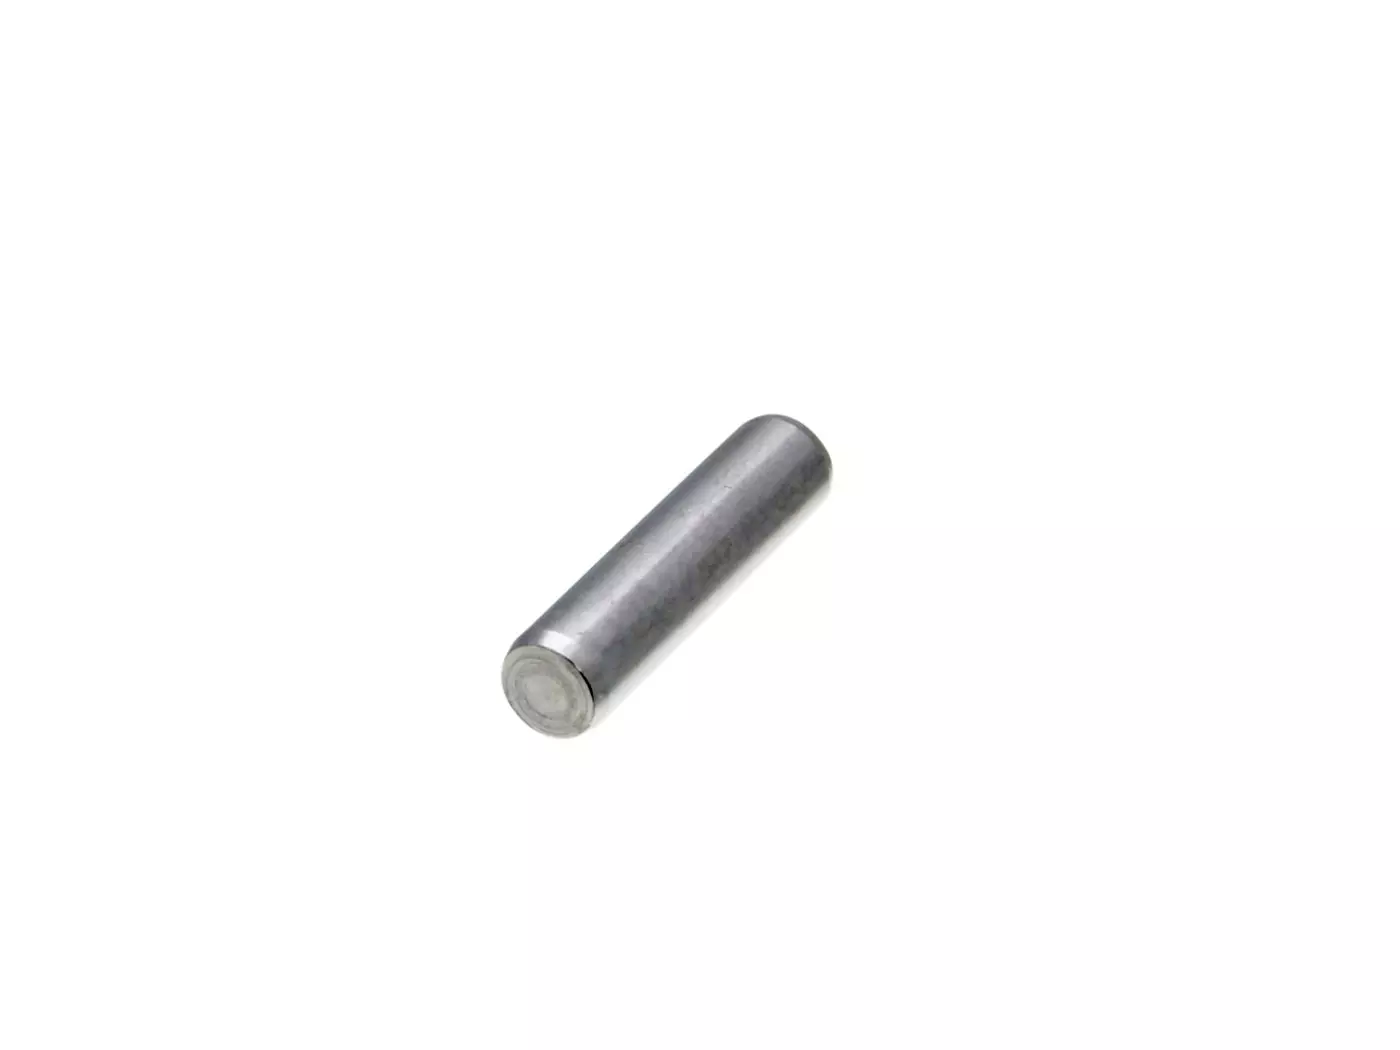 Oil Pump Dowel Pin For Minarelli, Keeway, CPI, China 2-stroke